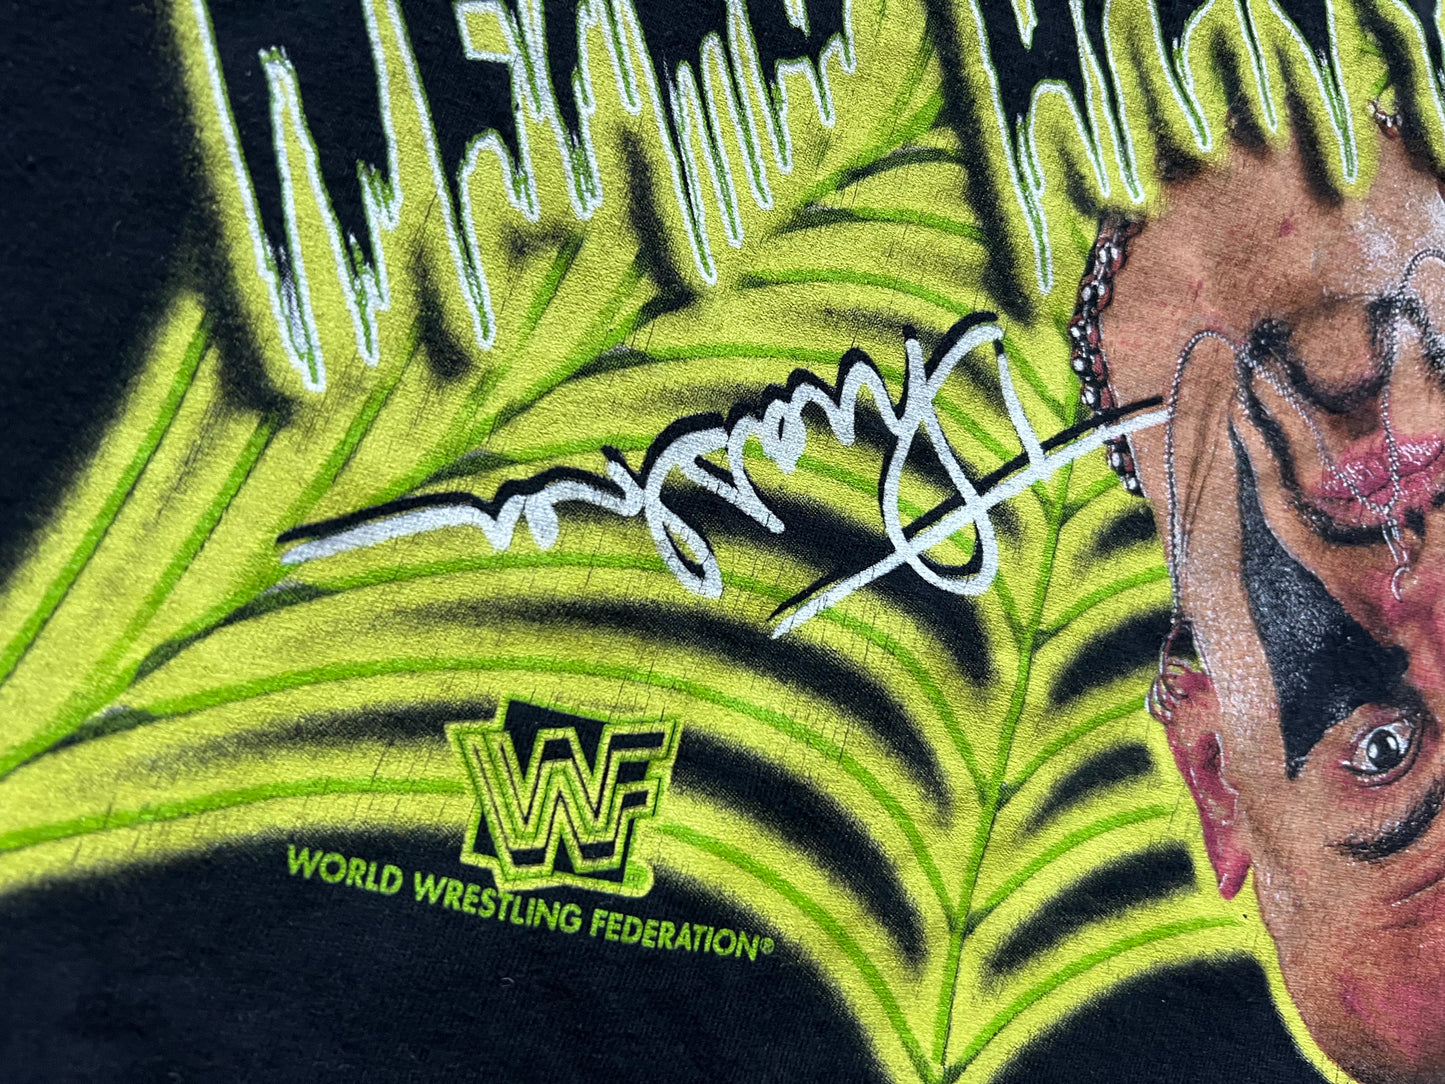 1997 WWF Headbangers shirt featuring Mosh and Thrasher